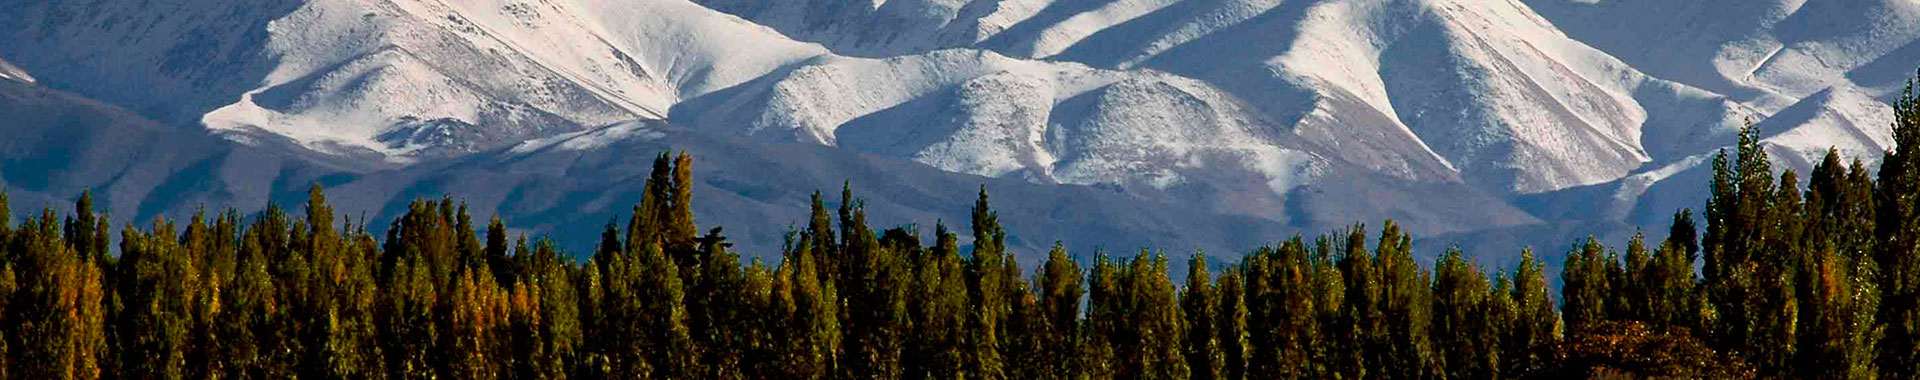 Argentina - Mendoza - Paseos - Panoramica